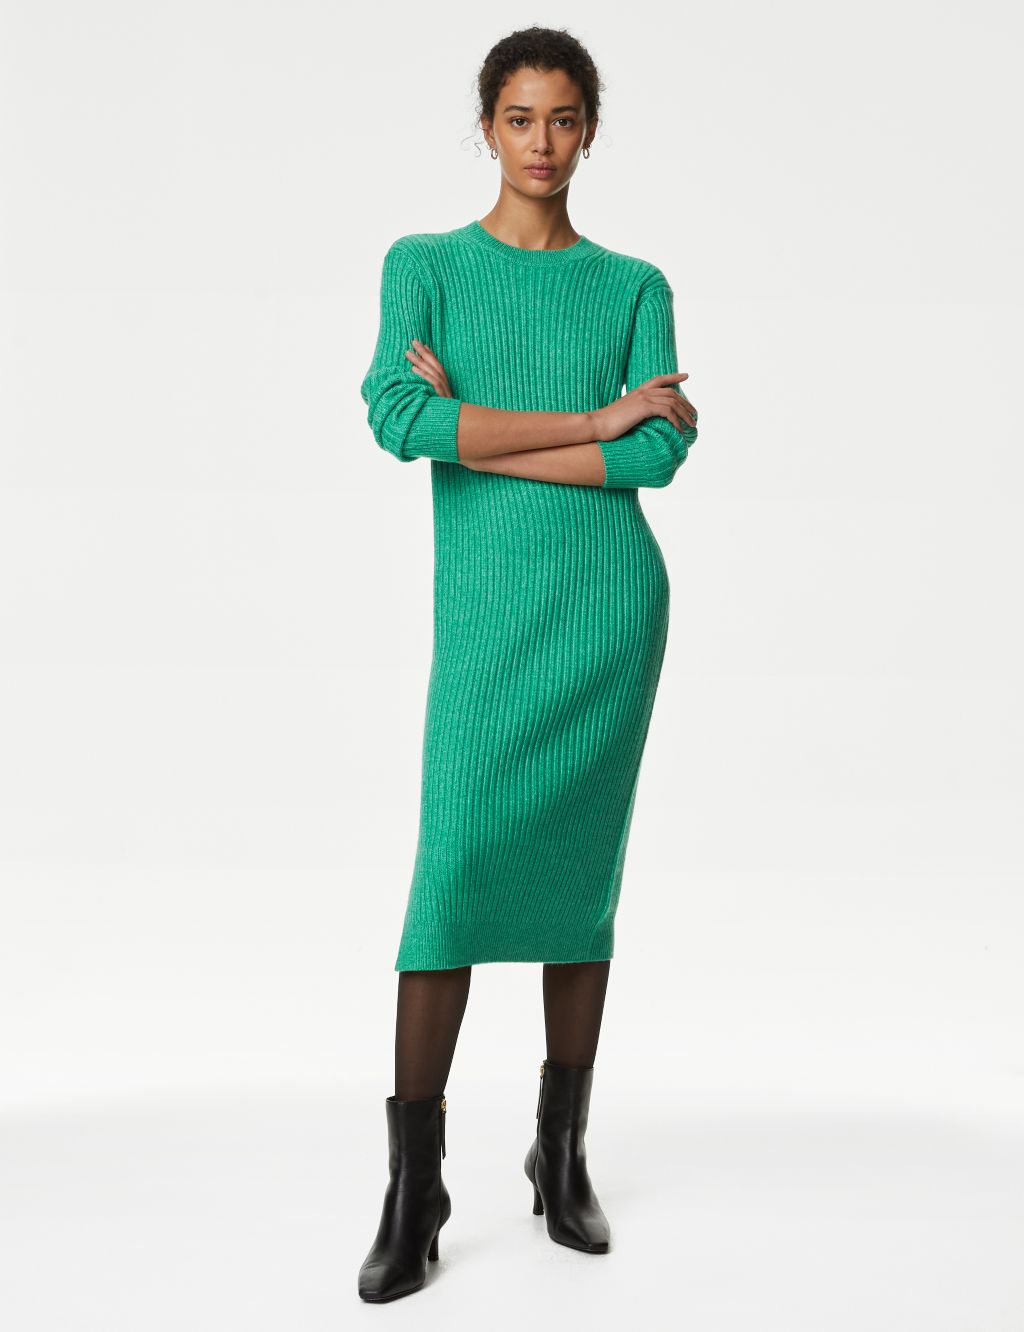 Ribbed Knitted Midi Dress image 1